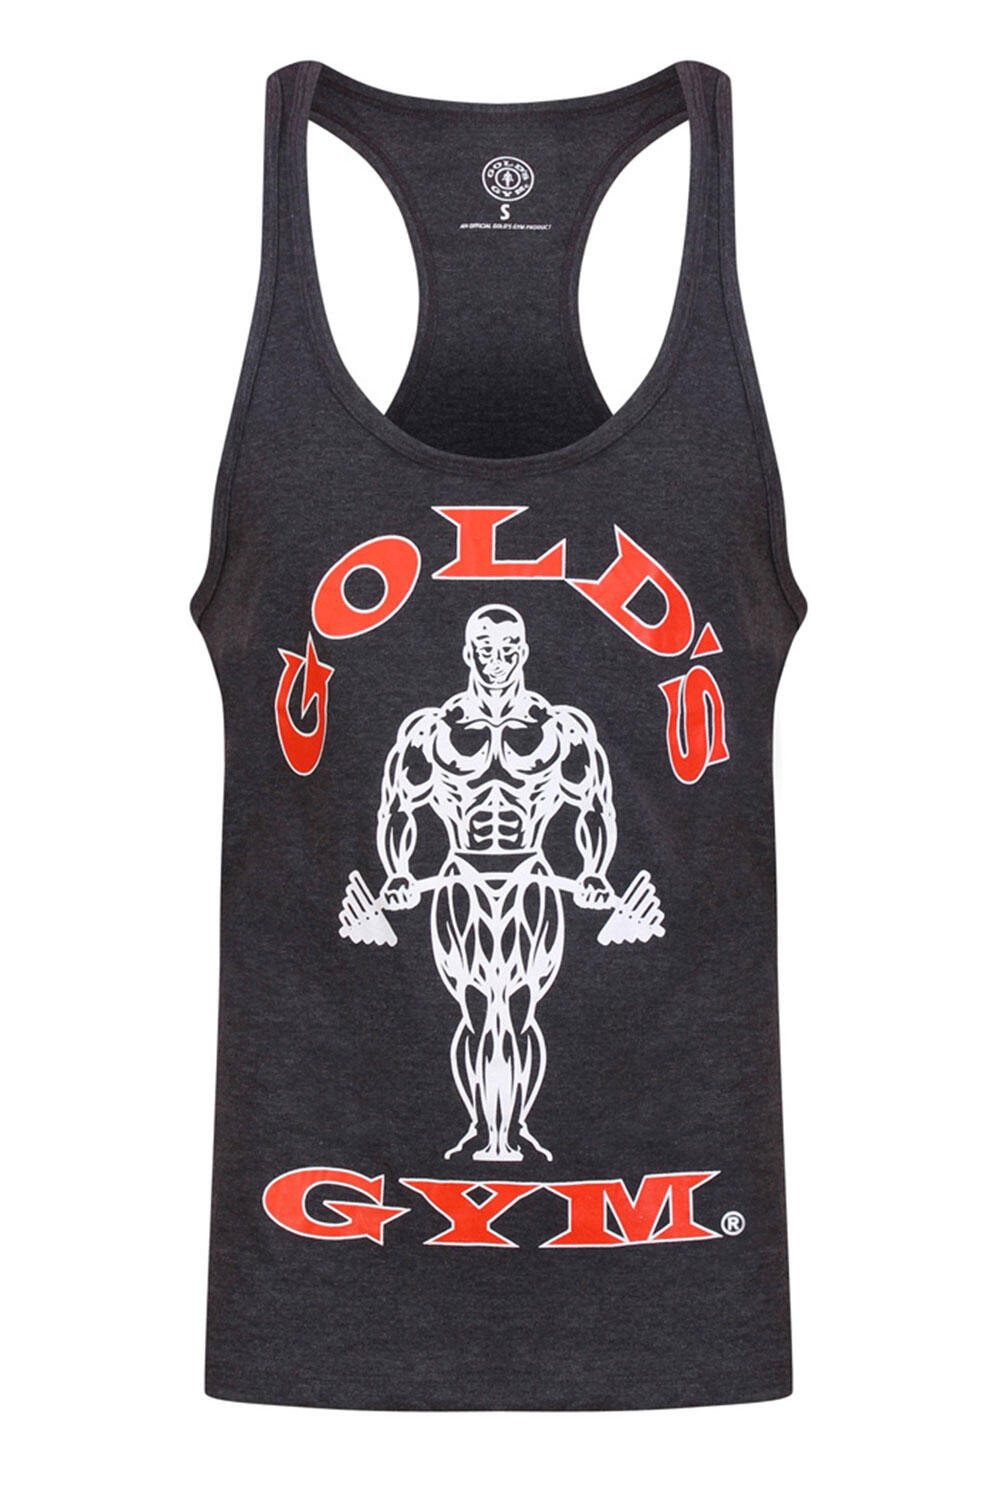 Men's Gold's Gym Muscle Joe Print Premium Stringer Vest 1/3